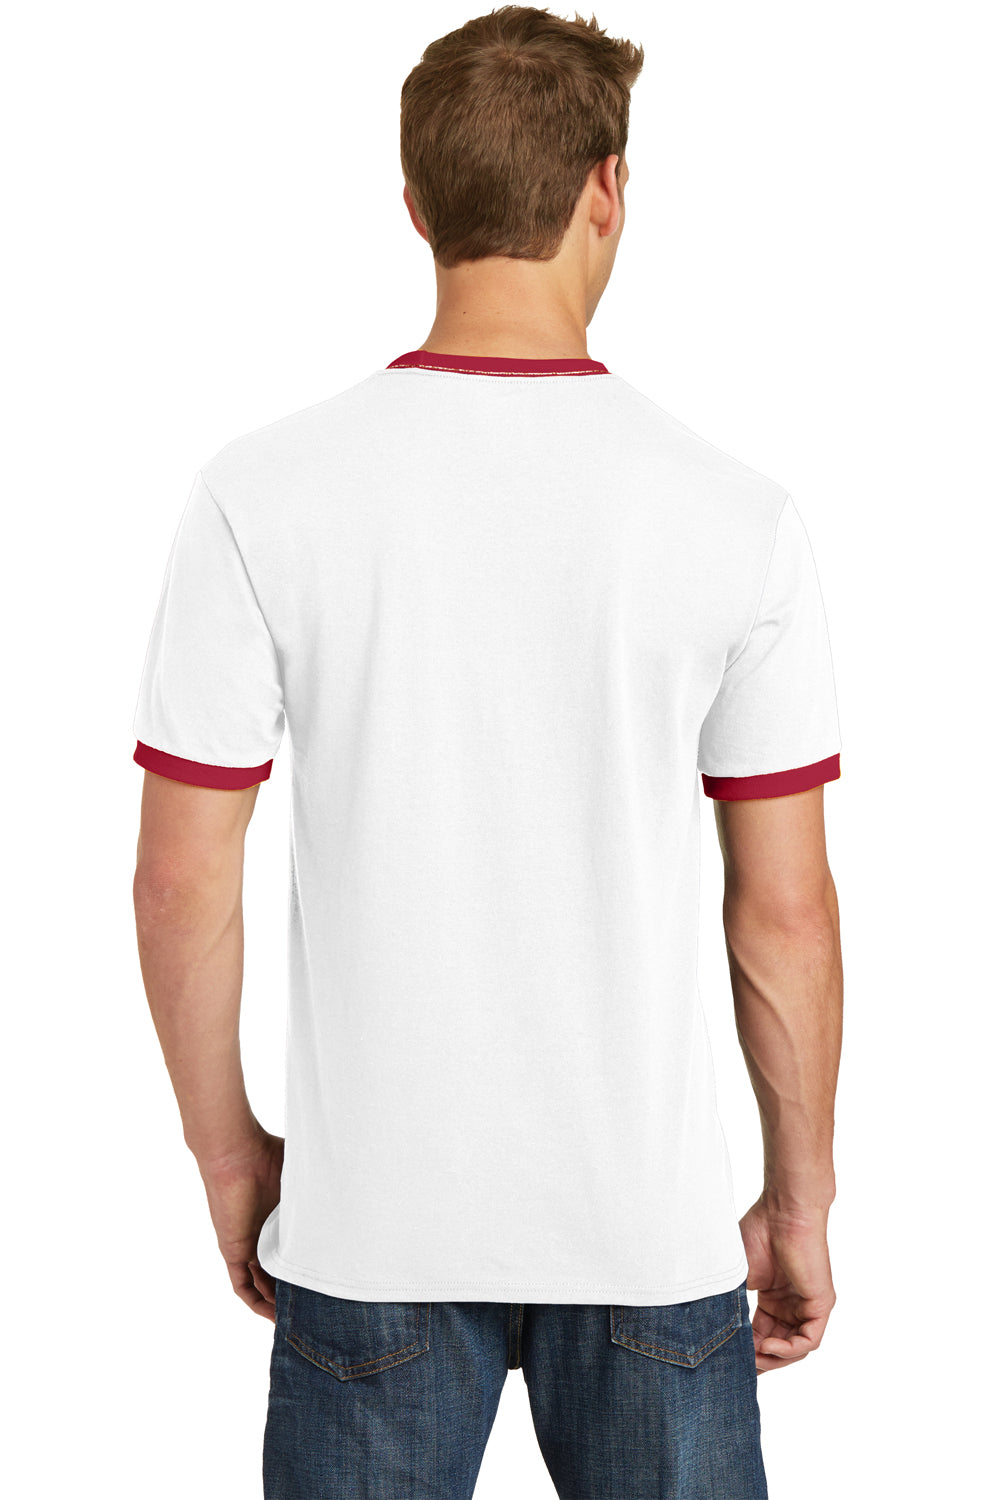 Port & Company PC54R Mens Core Ringer Short Sleeve Crewneck T-Shirt White/Red Back